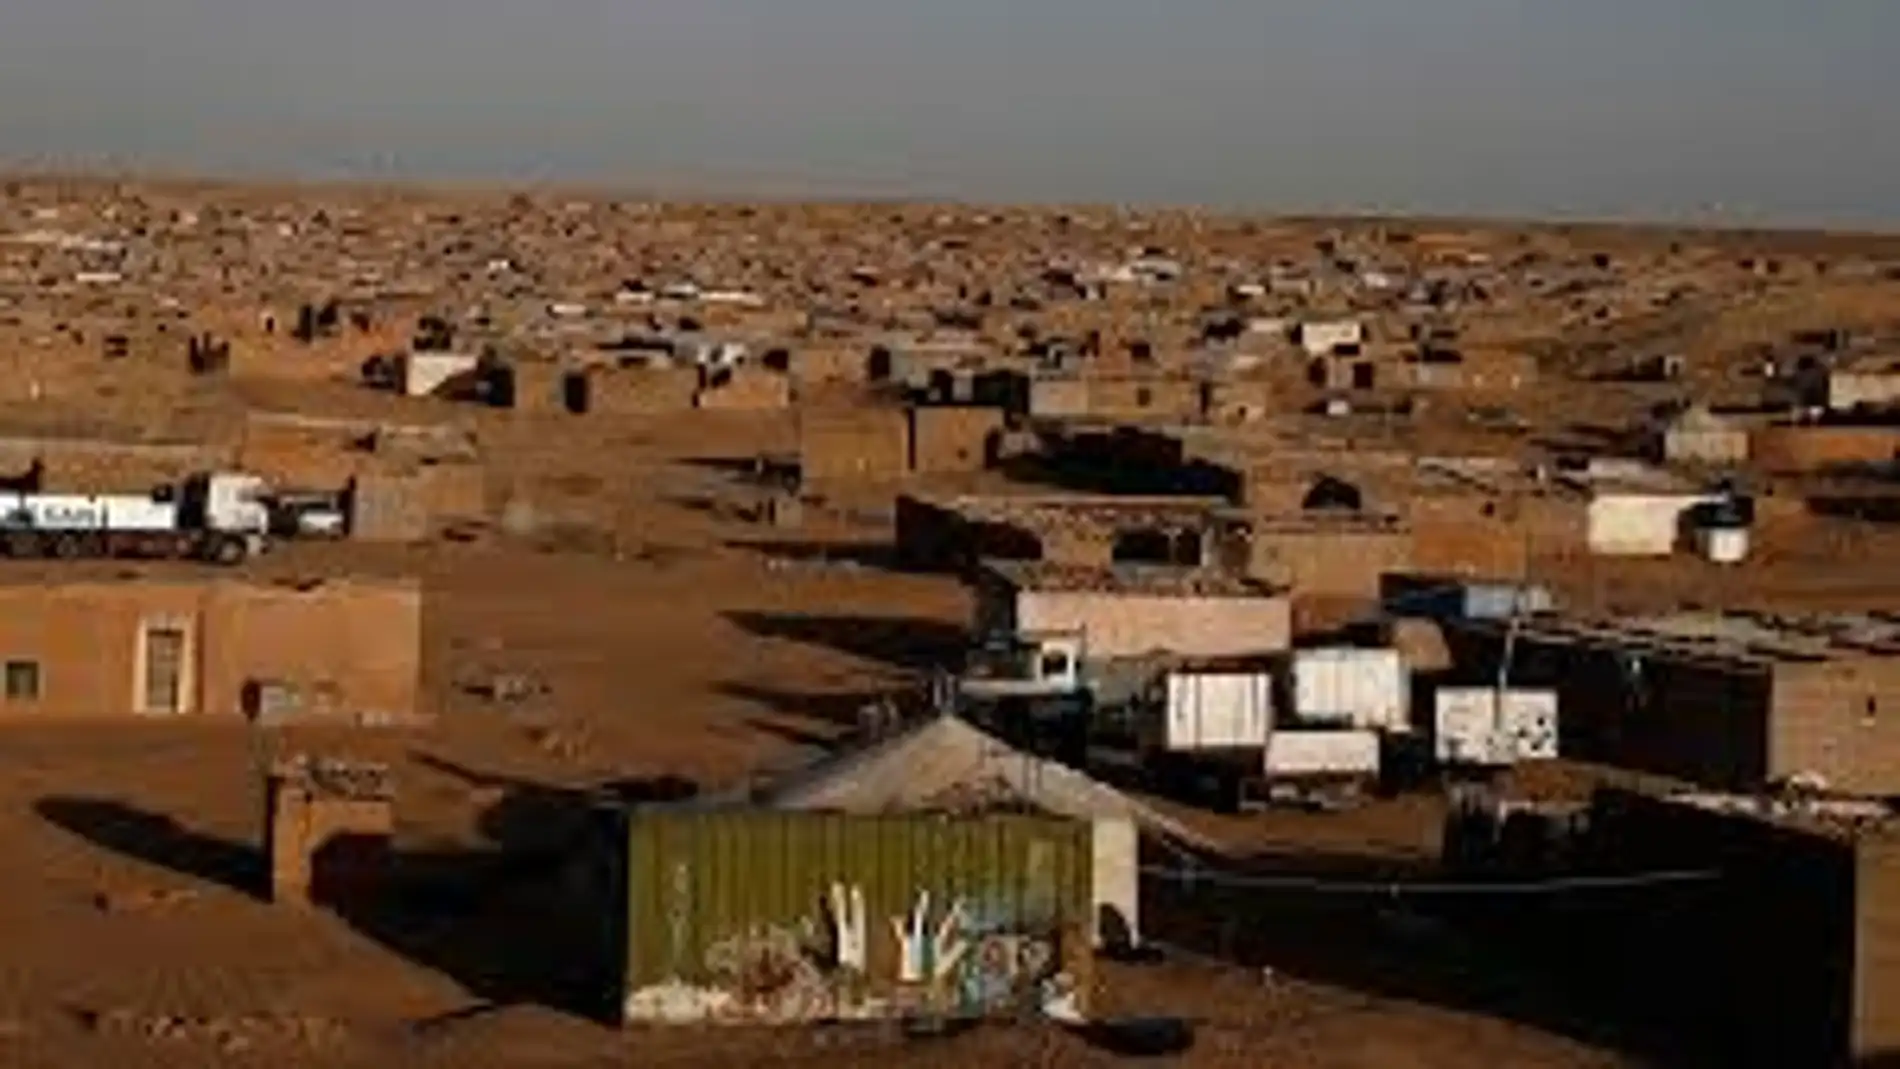 Campamento refugiados saharauis en Tinduf.